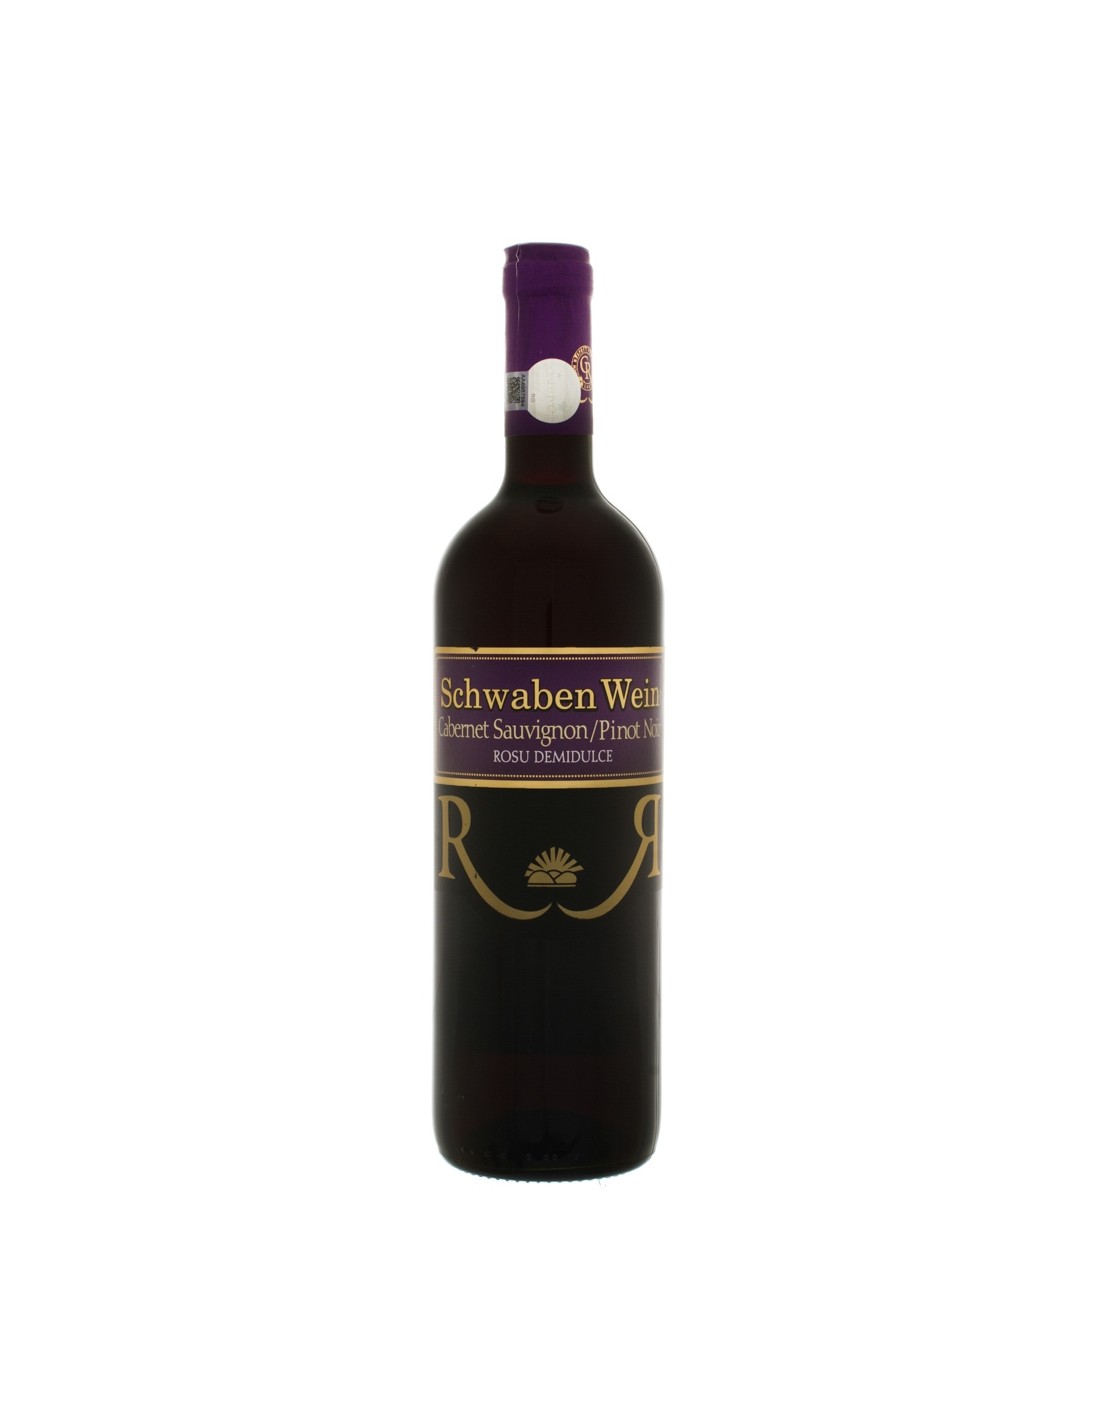 Vin rosu demidulce, Cupaj, Schwaben Wein Recas, 0.75L, 12.5% alc., Romania alcooldiscount.ro